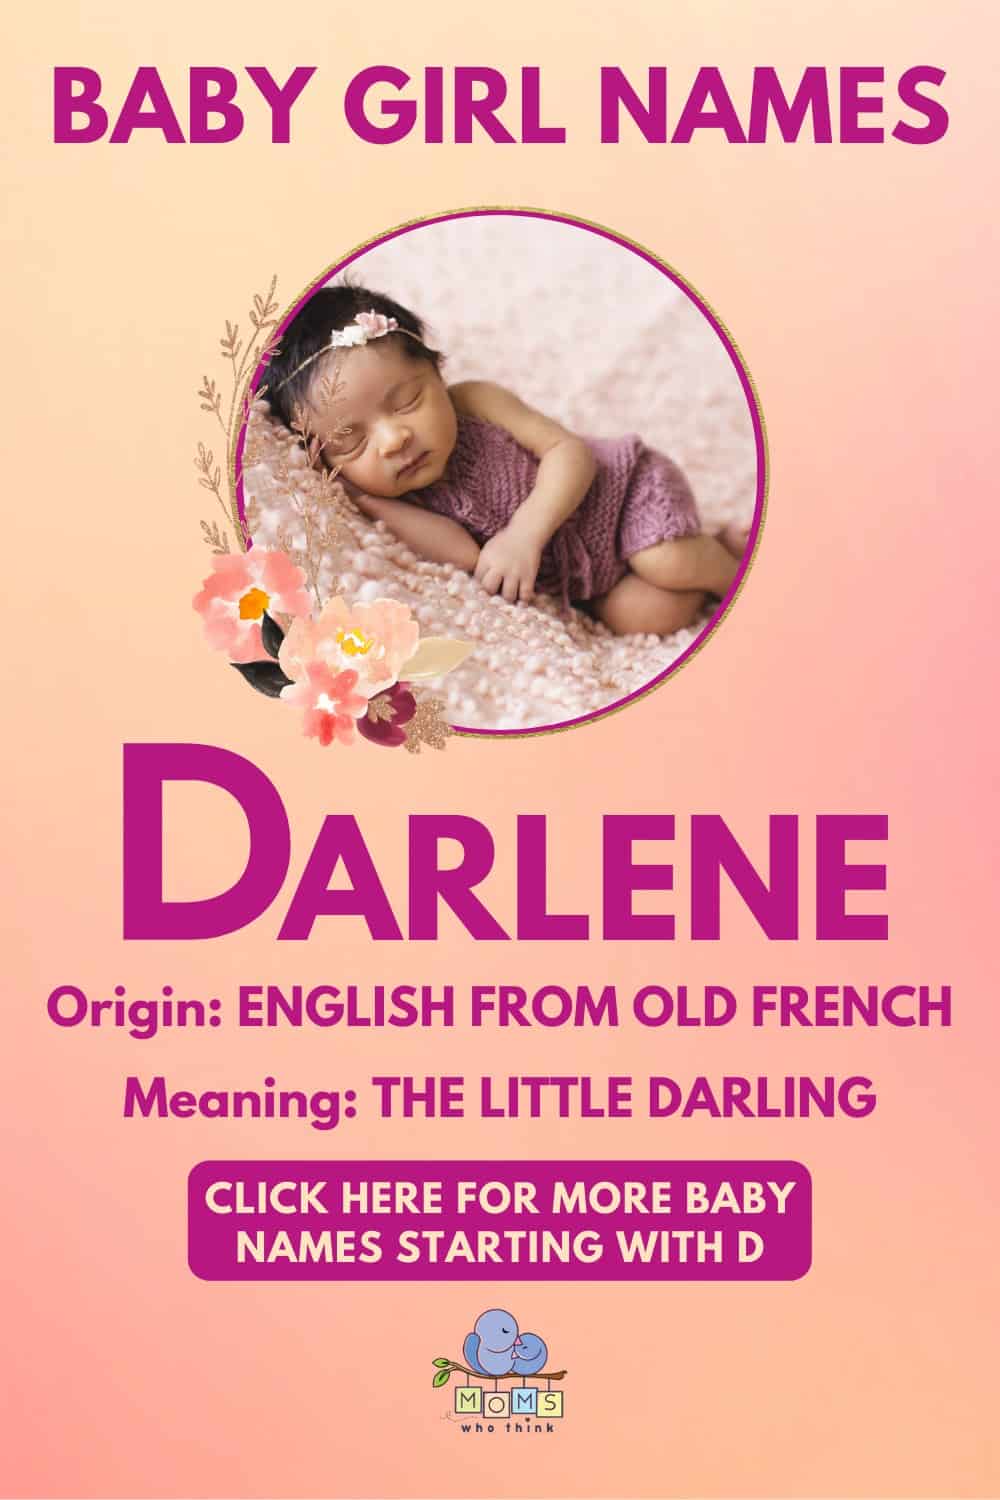 Baby girl name meanings - Darlene